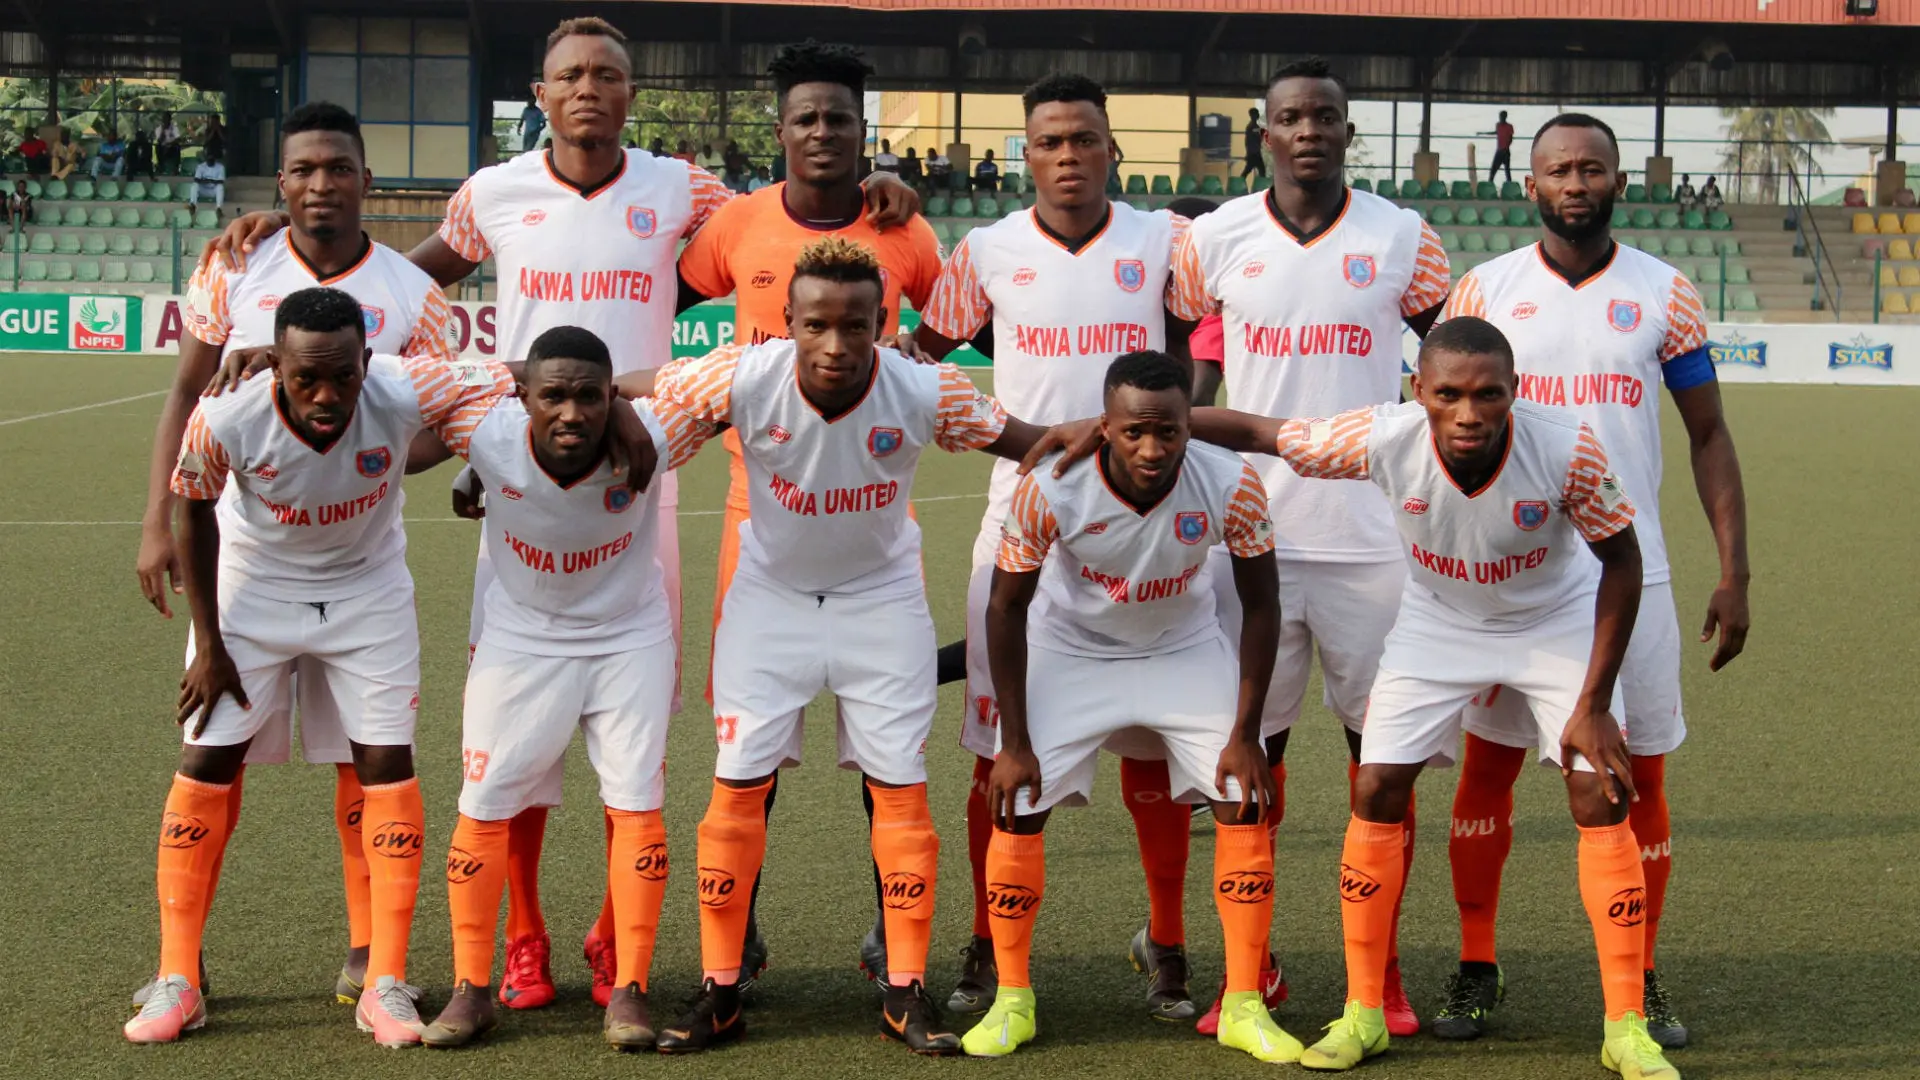 Akwa United unlucky in defeat to Rangers — Abdullahi